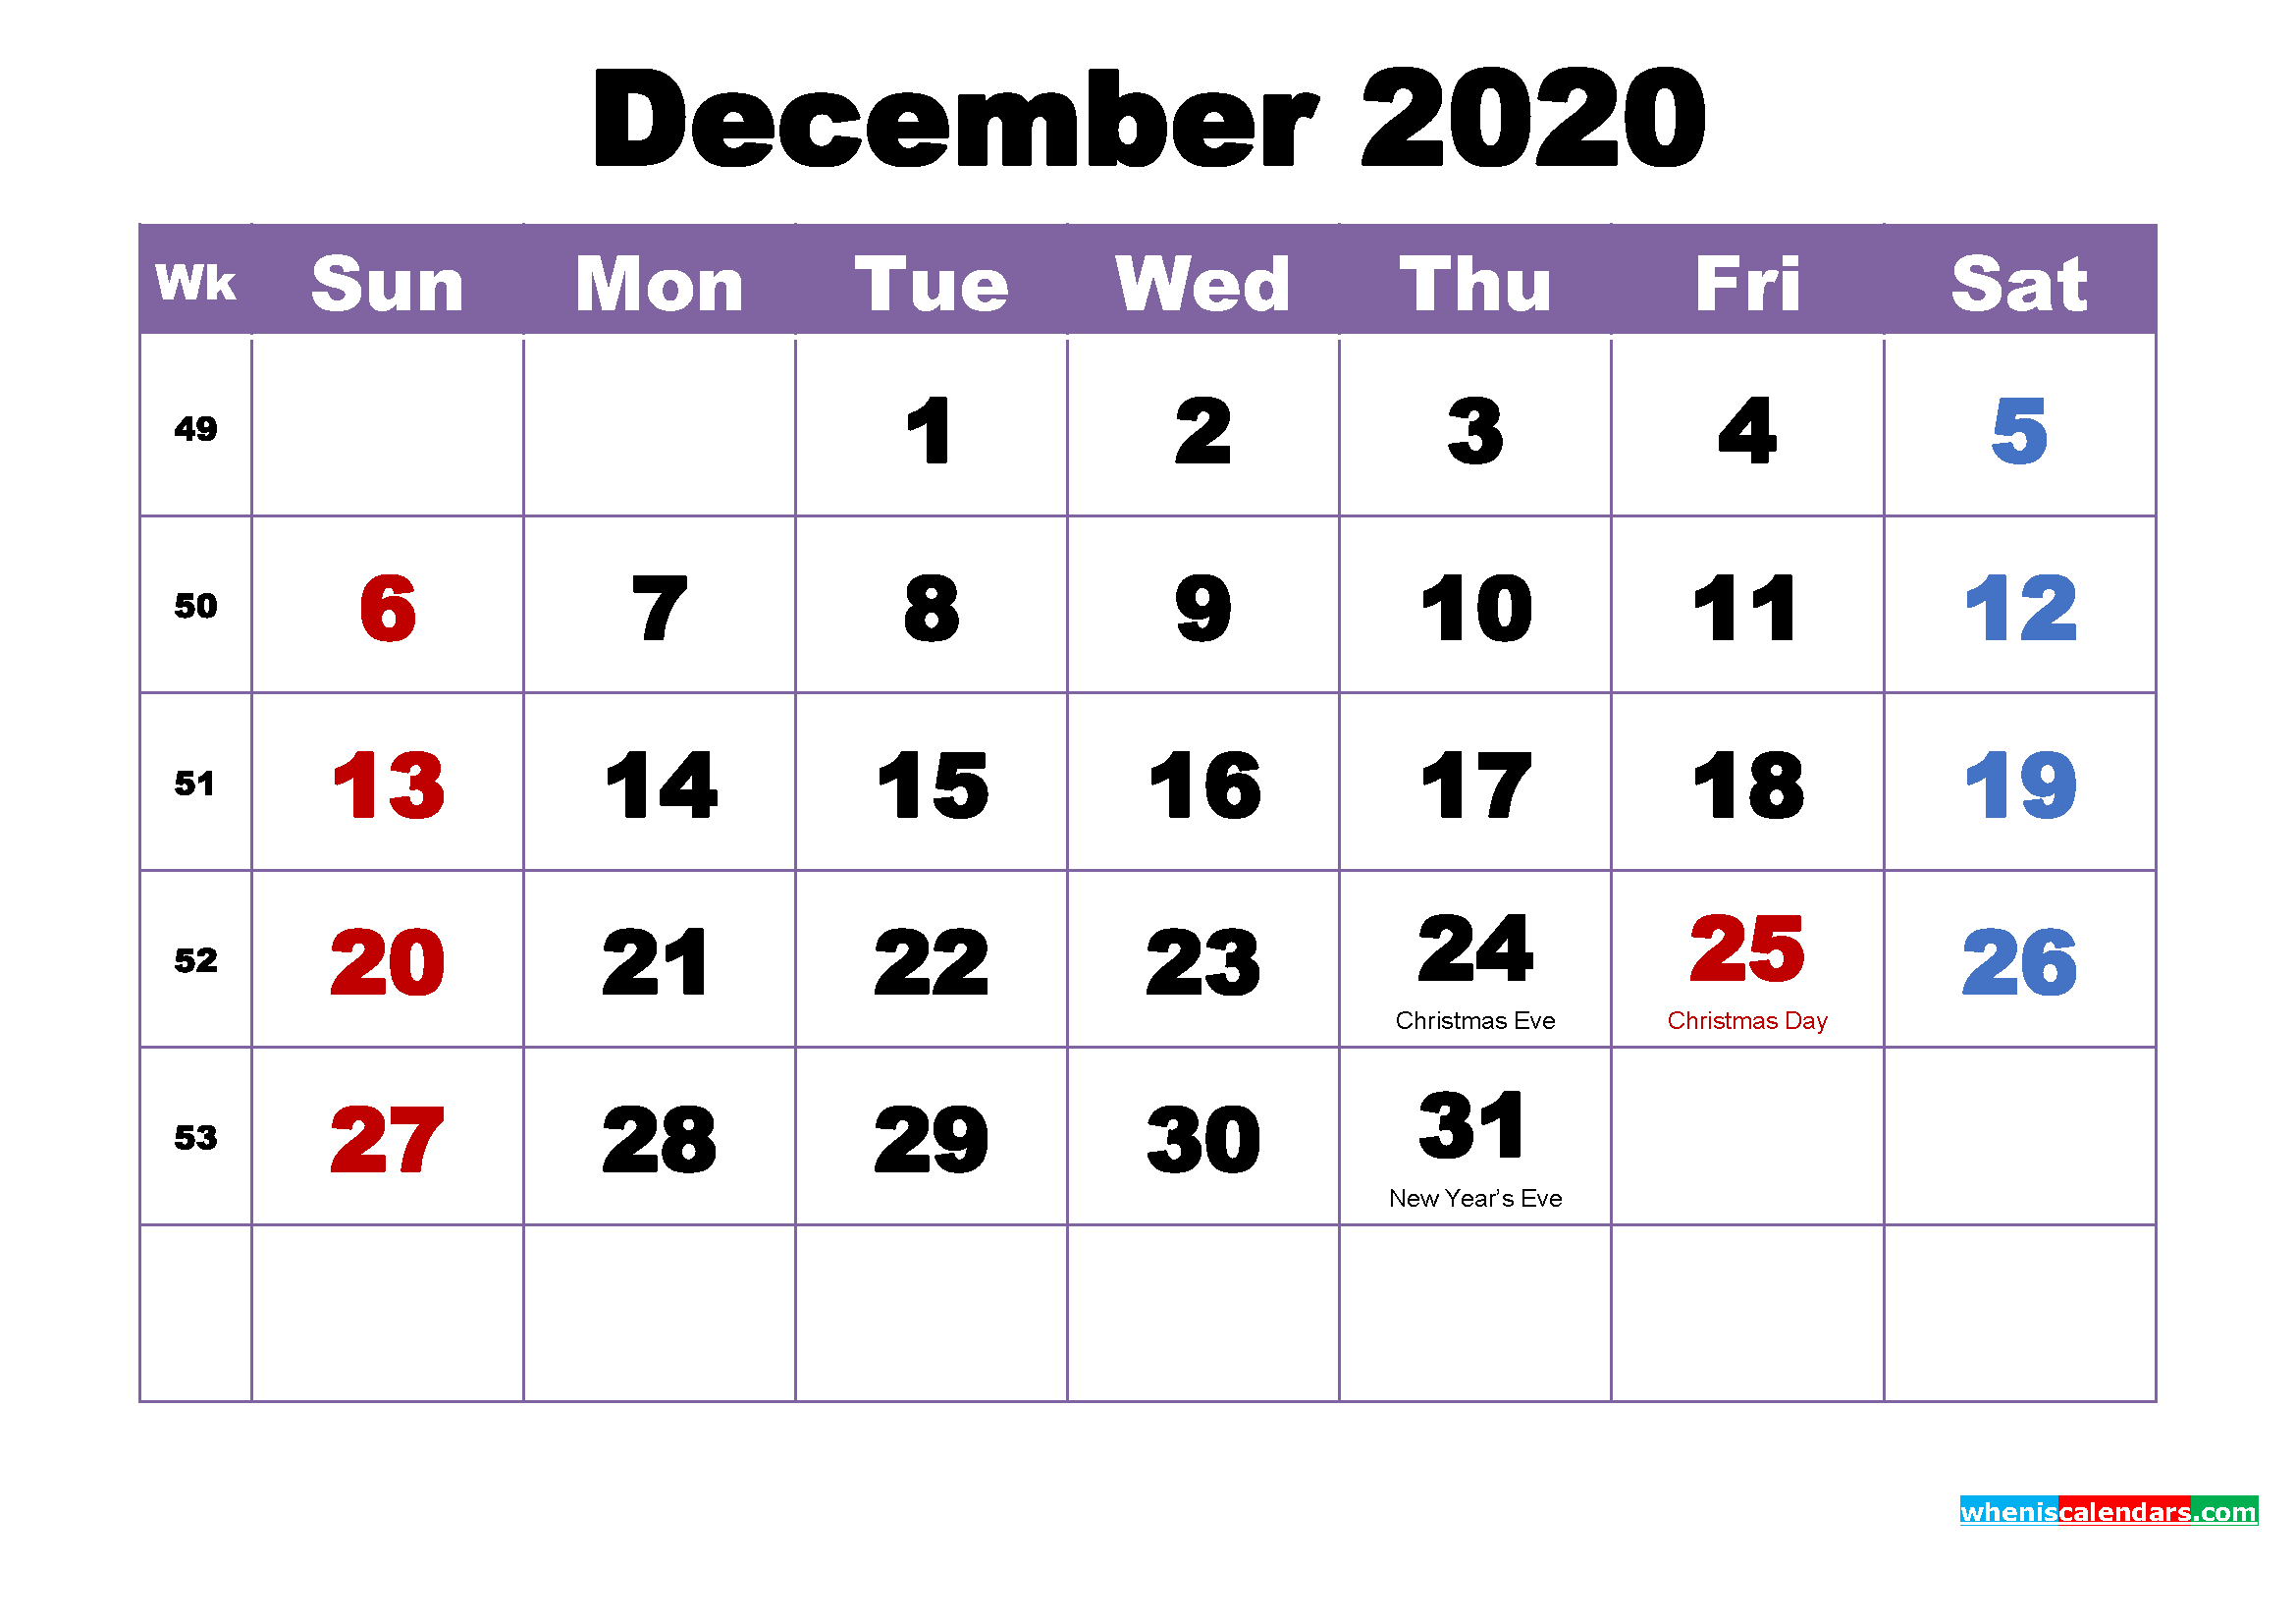 December 2020 Desktop Calendar Monthly - Free Printable December 2020 Calendar And January 2021 Calendar